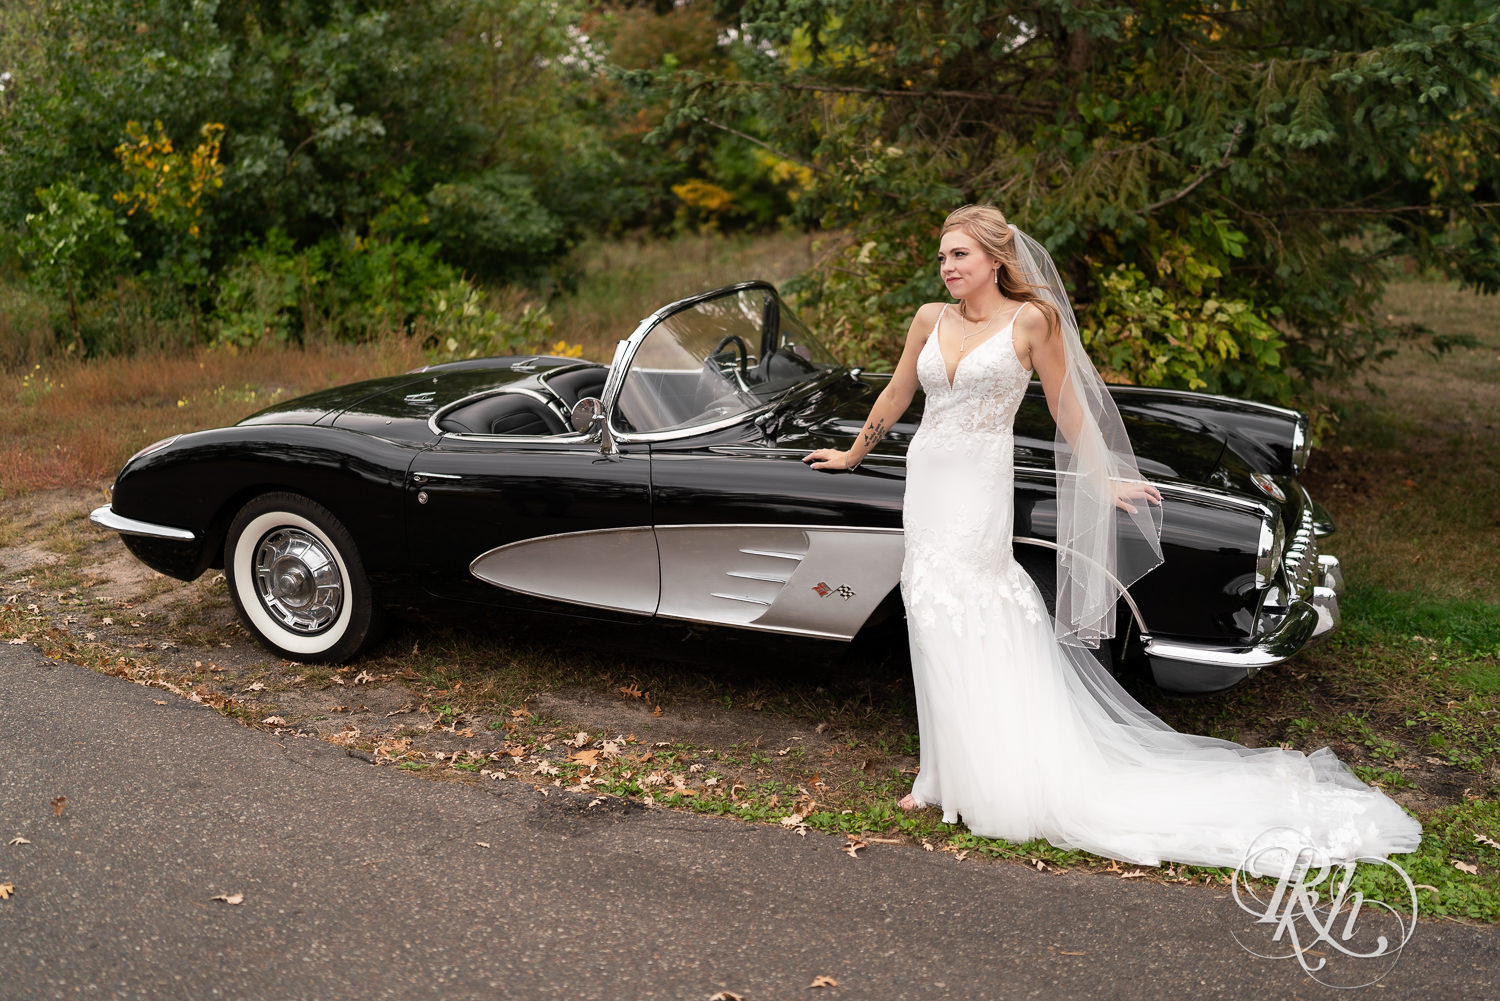 Bride smiles in front of a vintage Corvette at Bunker Hills Event Center in Coon Rapids, Minnesota.